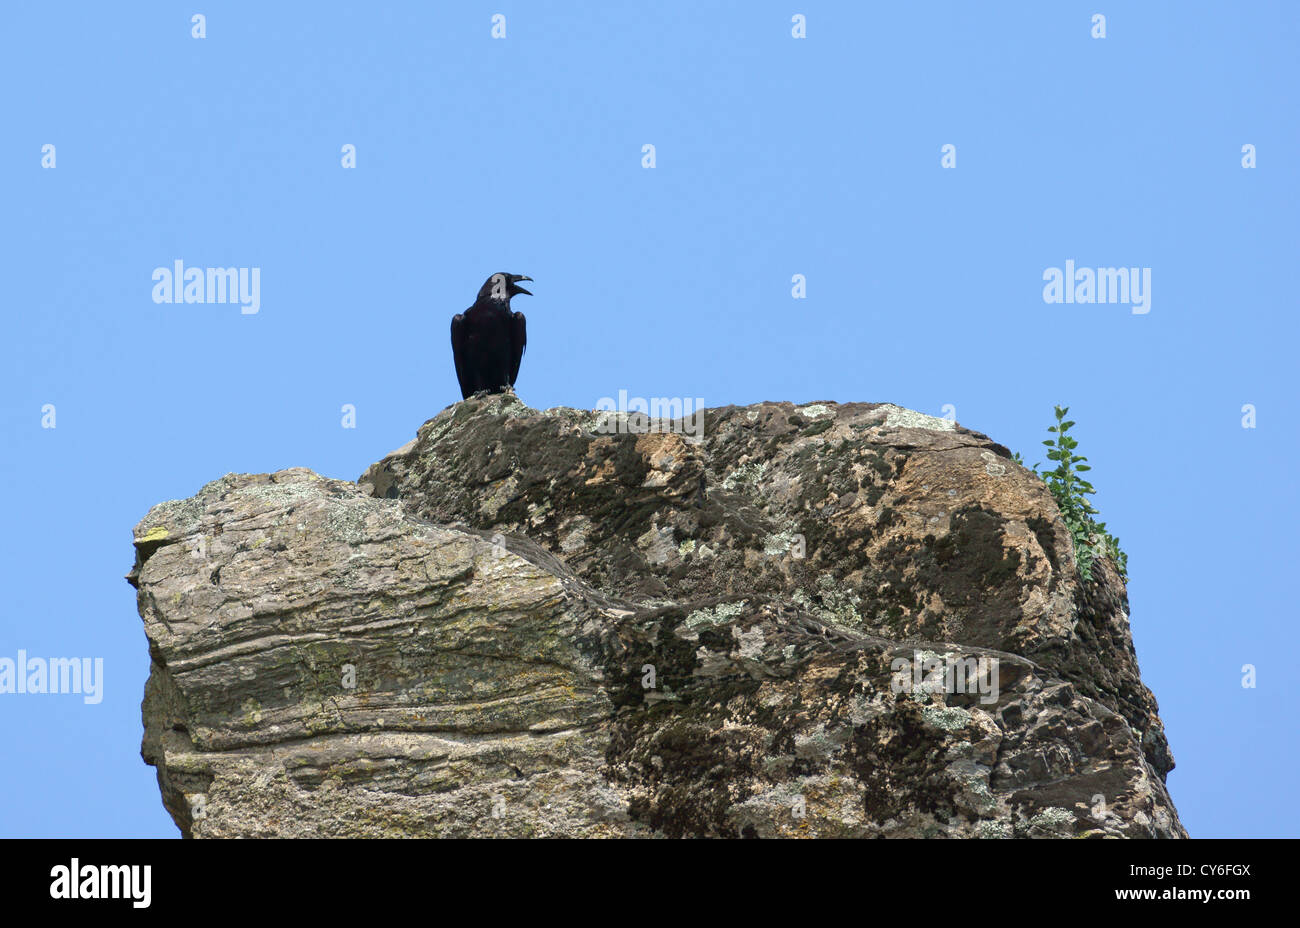 Black crow over on rock block Stock Photo